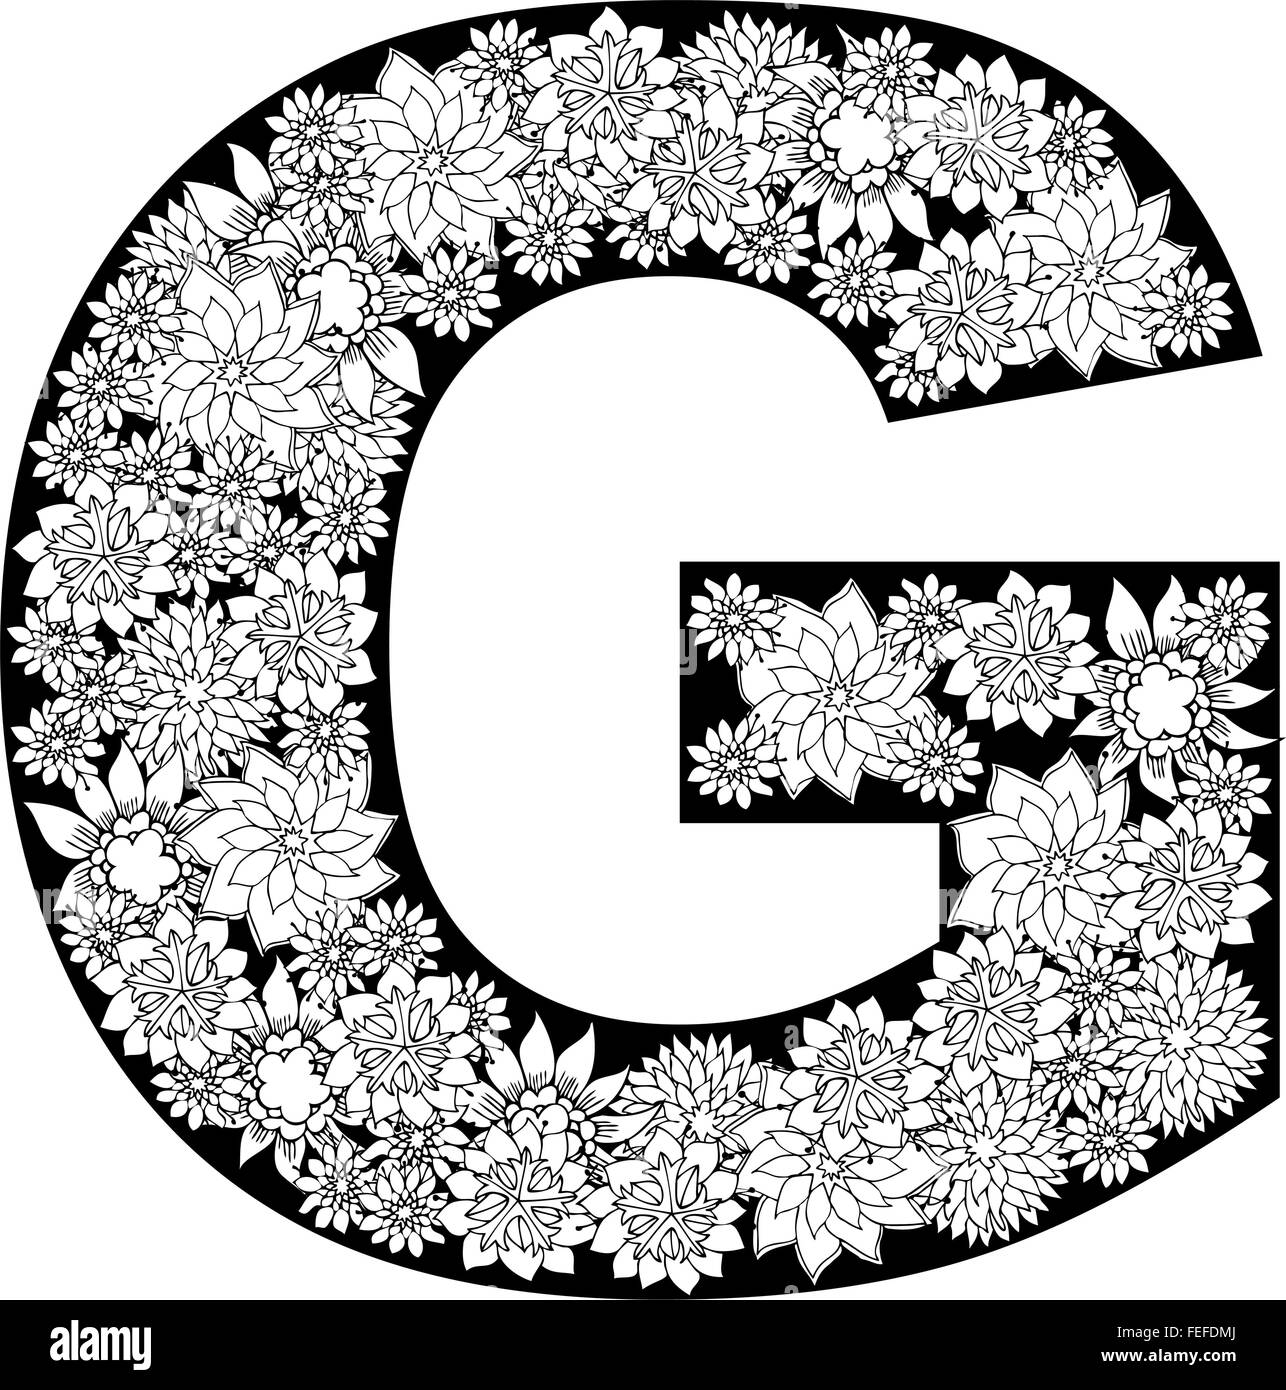 Hand drawn floral alphabet design. Letter G Stock Vector Image & Art ...